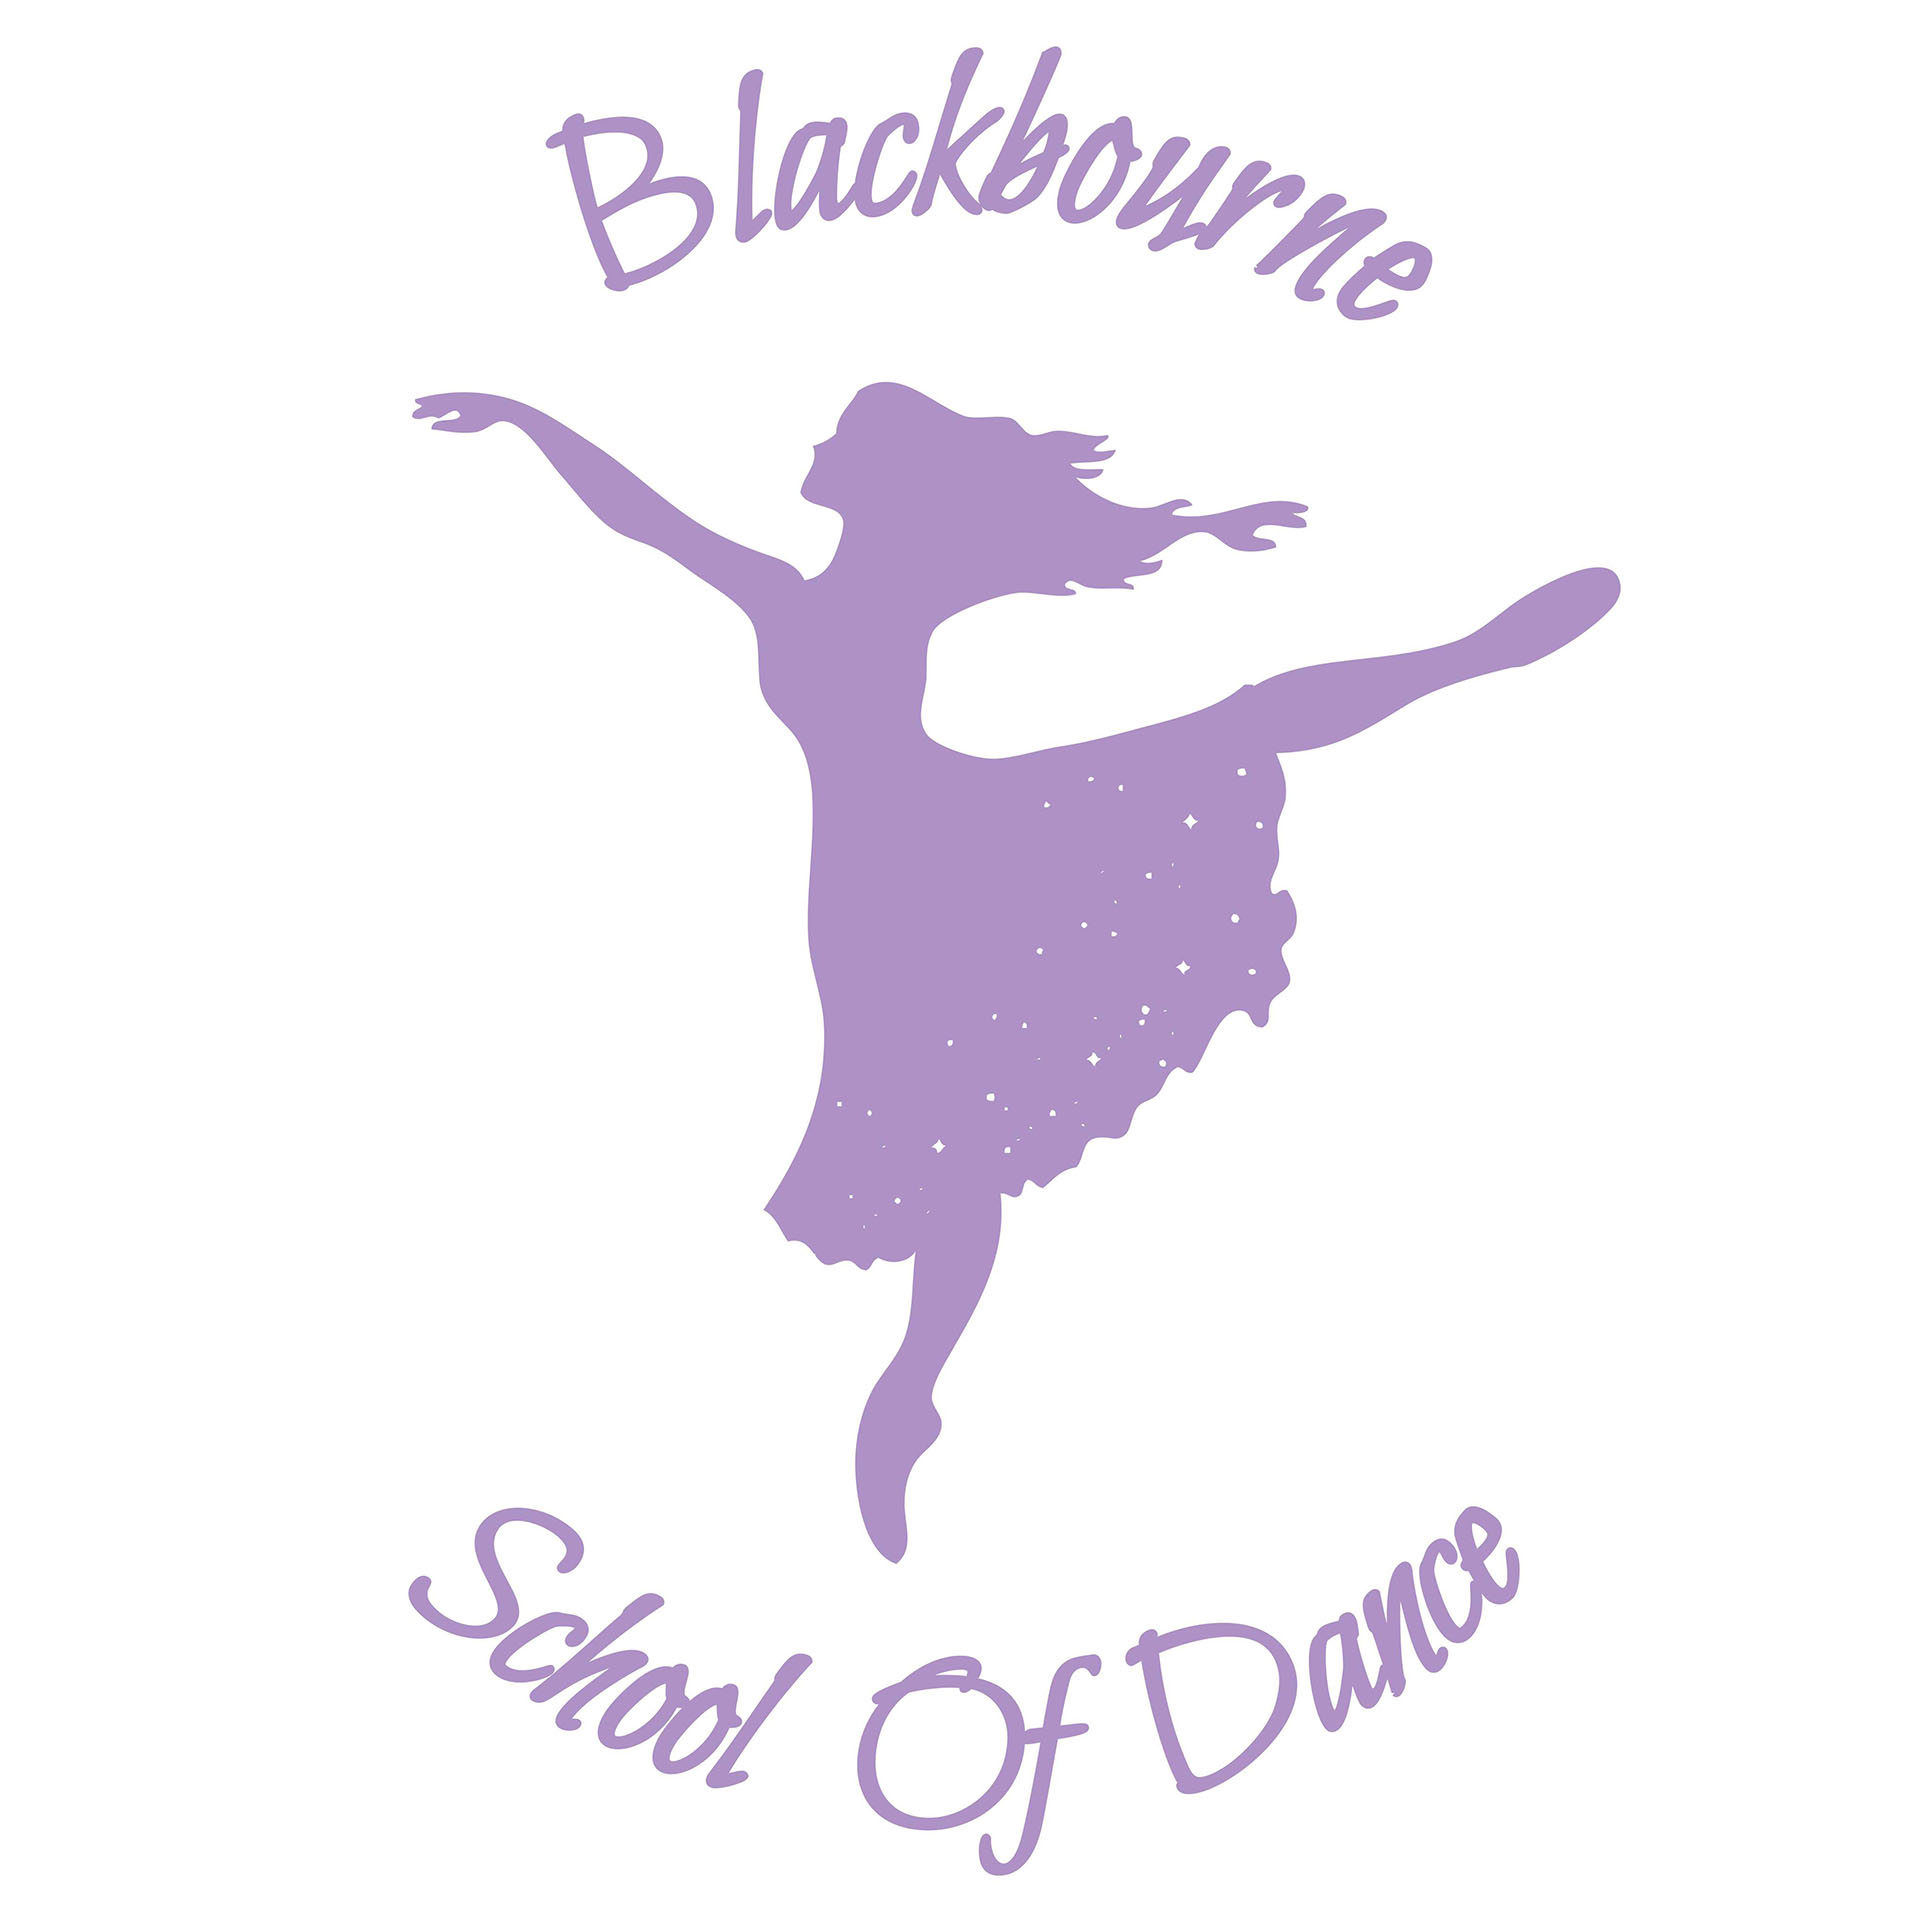 Blackbourne School of Dance's logo